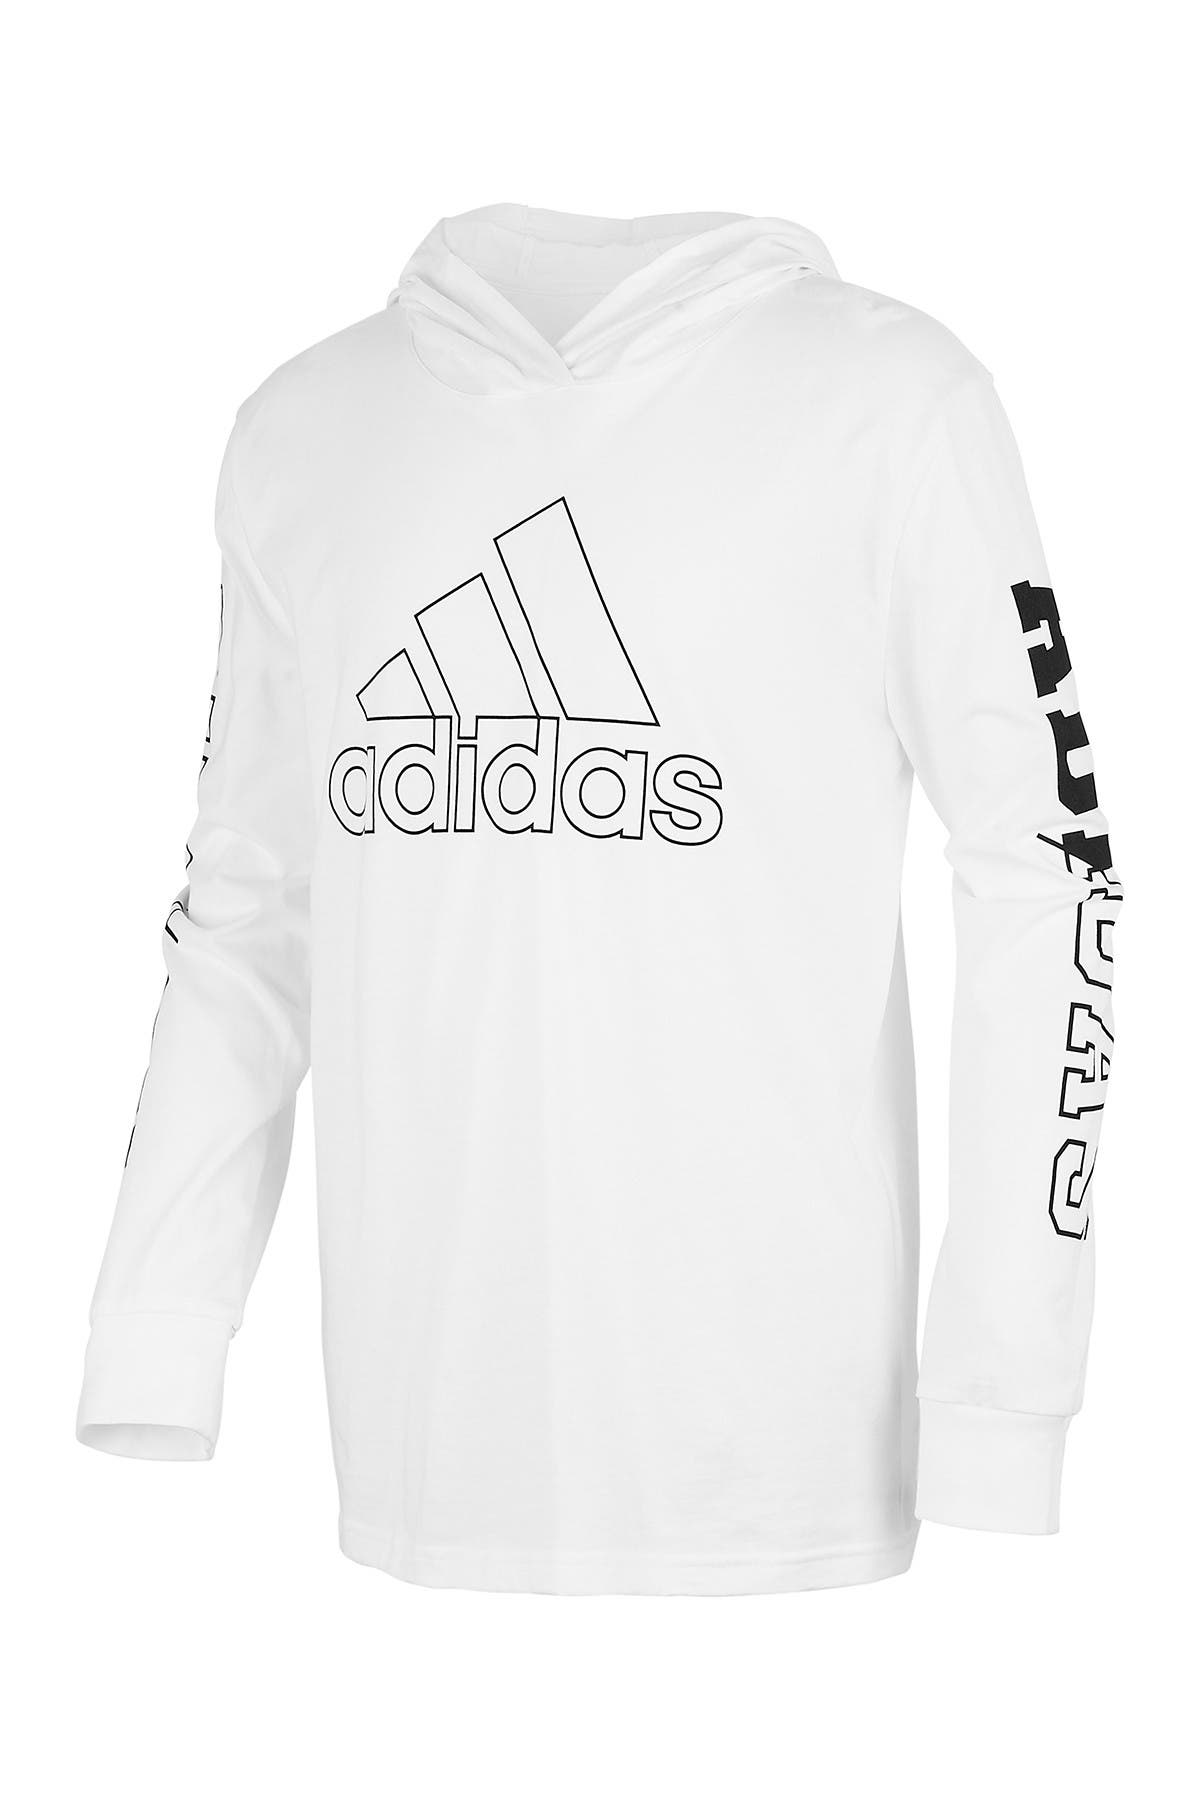 adidas graphic long sleeve hoodie